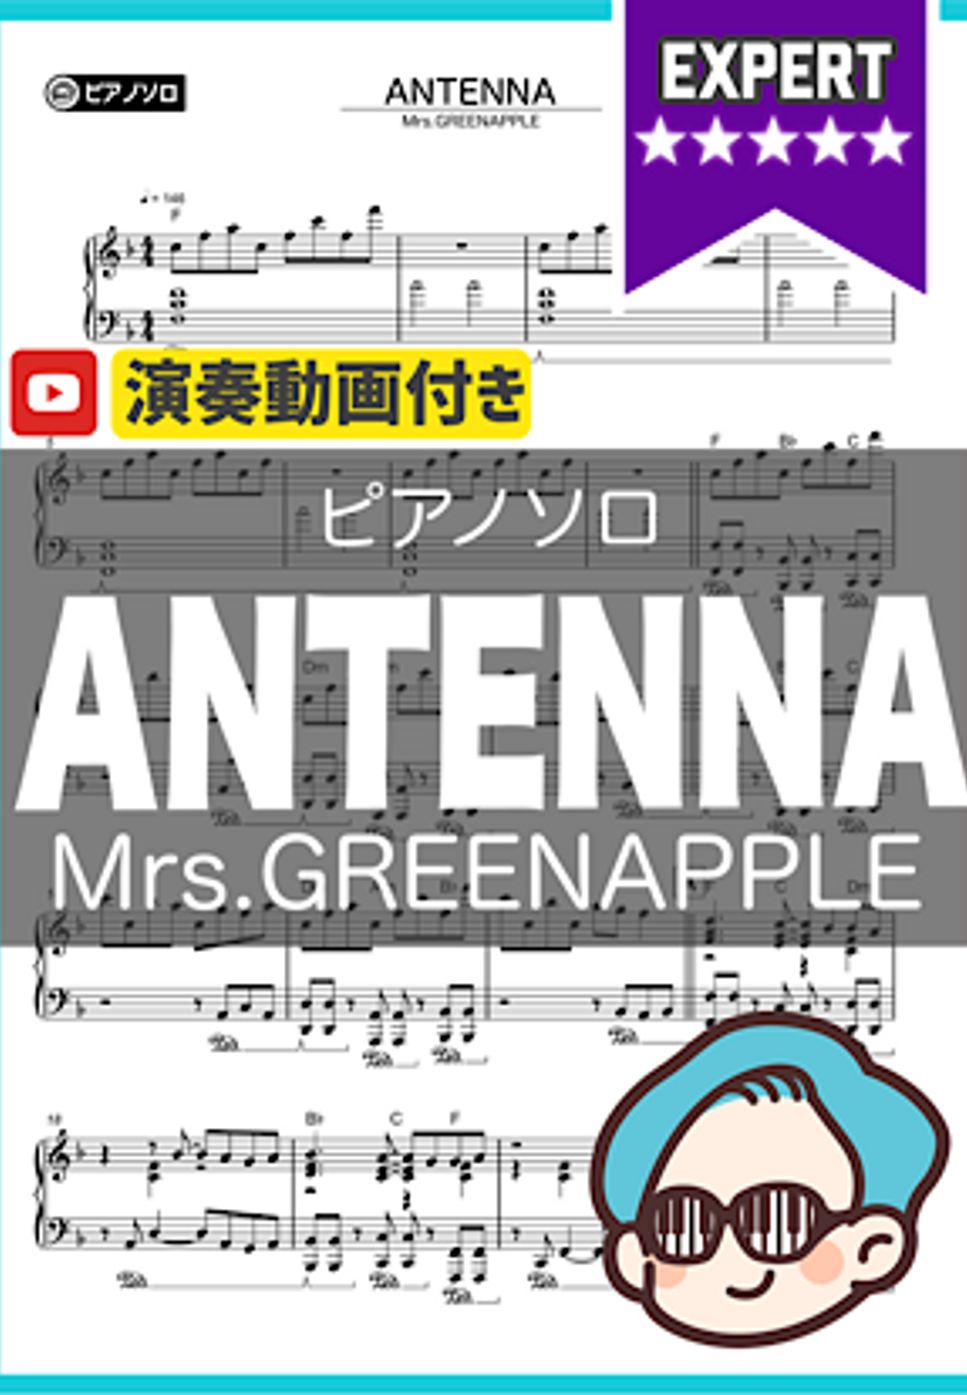 Mrs.GREENAPPLE - ANTENNA by シータピアノ